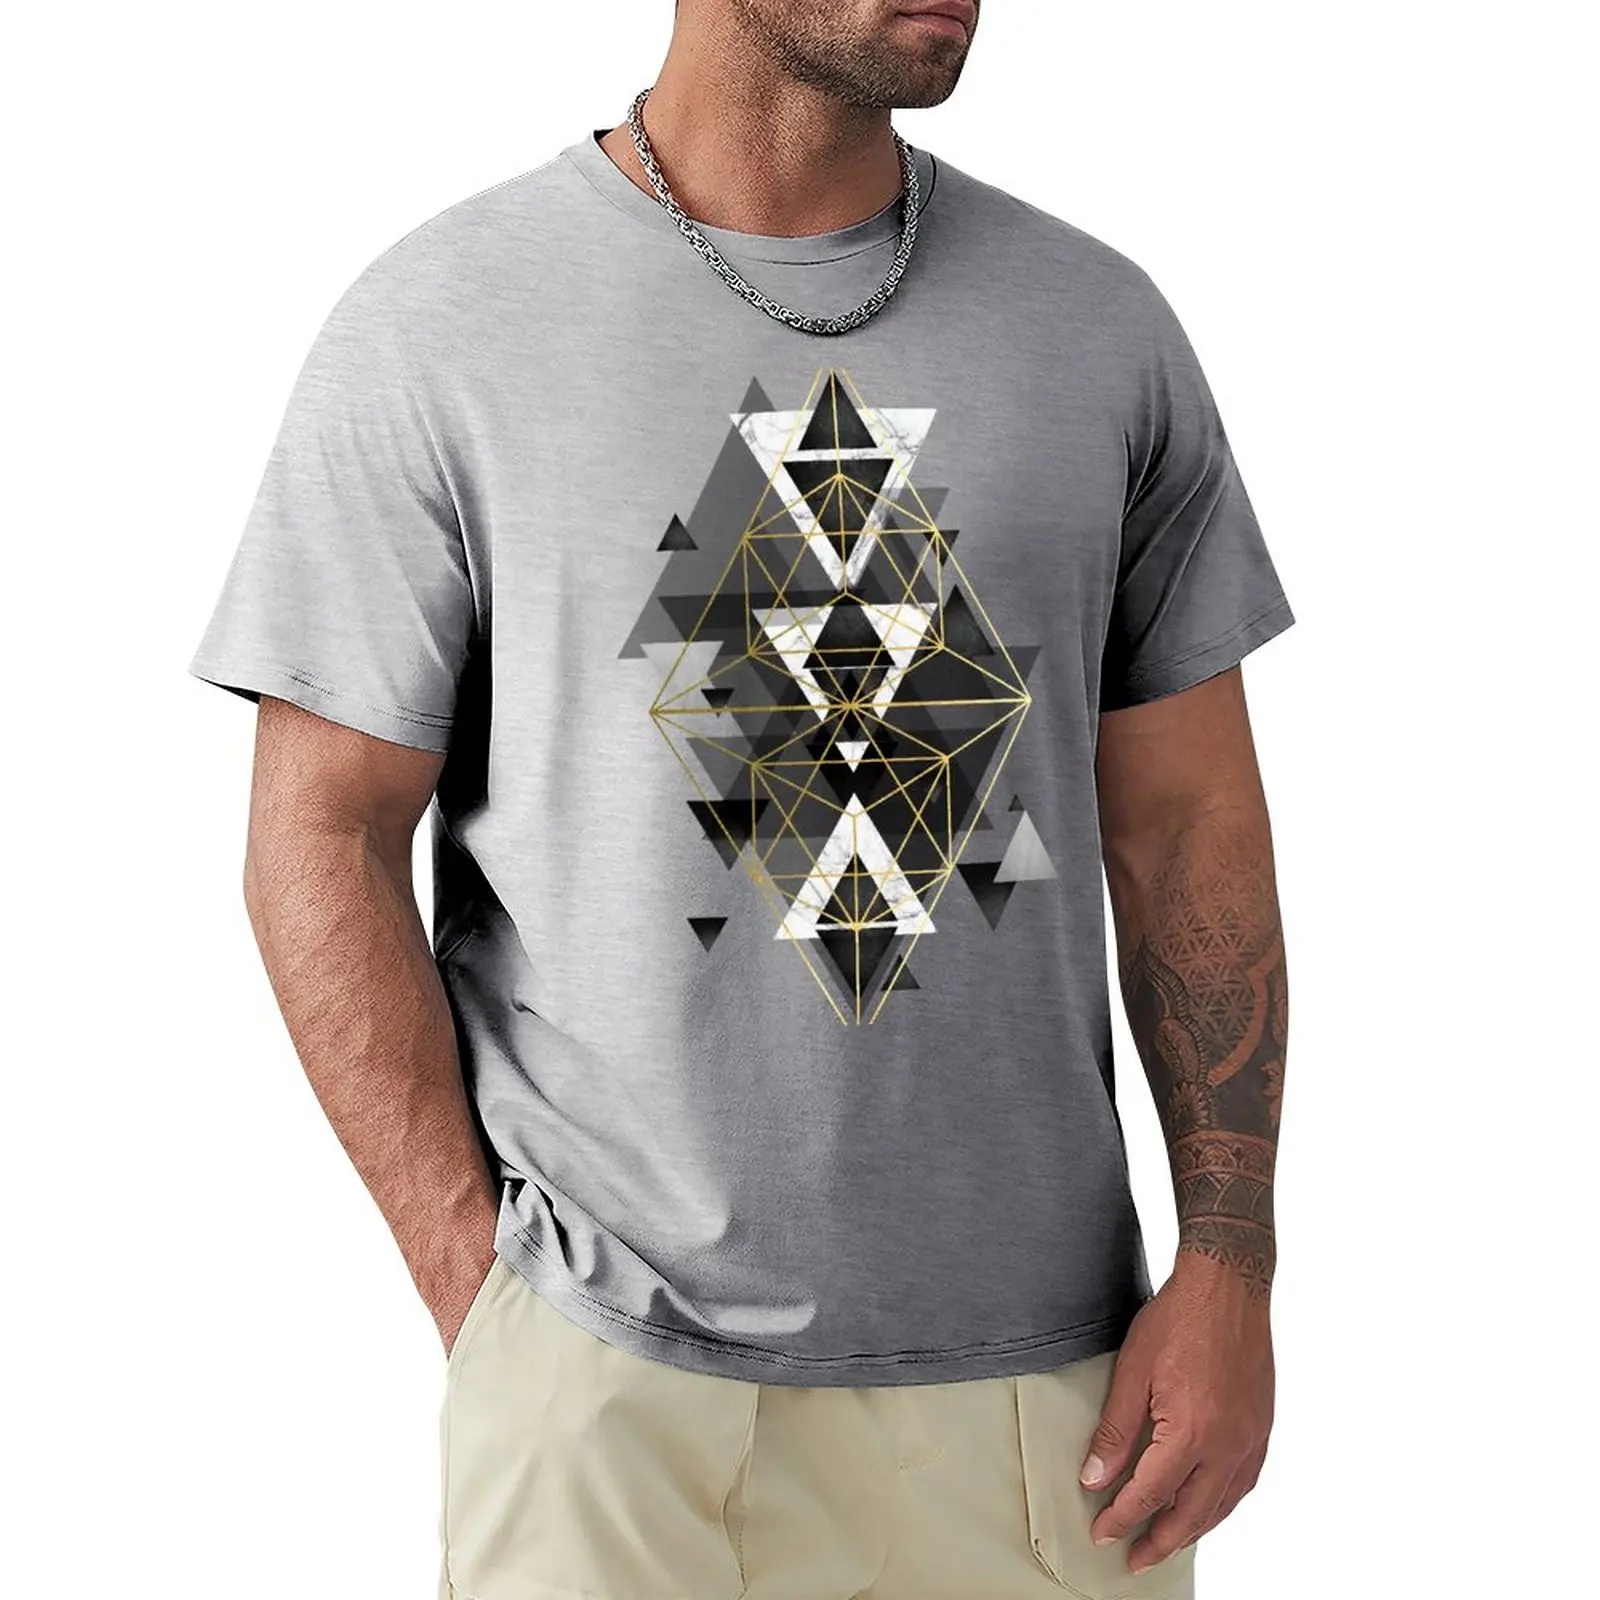 

Черная, белая и Золотая Футболка с геометрическим рисунком, футболка оверсайз, футболки ca, тяжелые футболки для мужчин